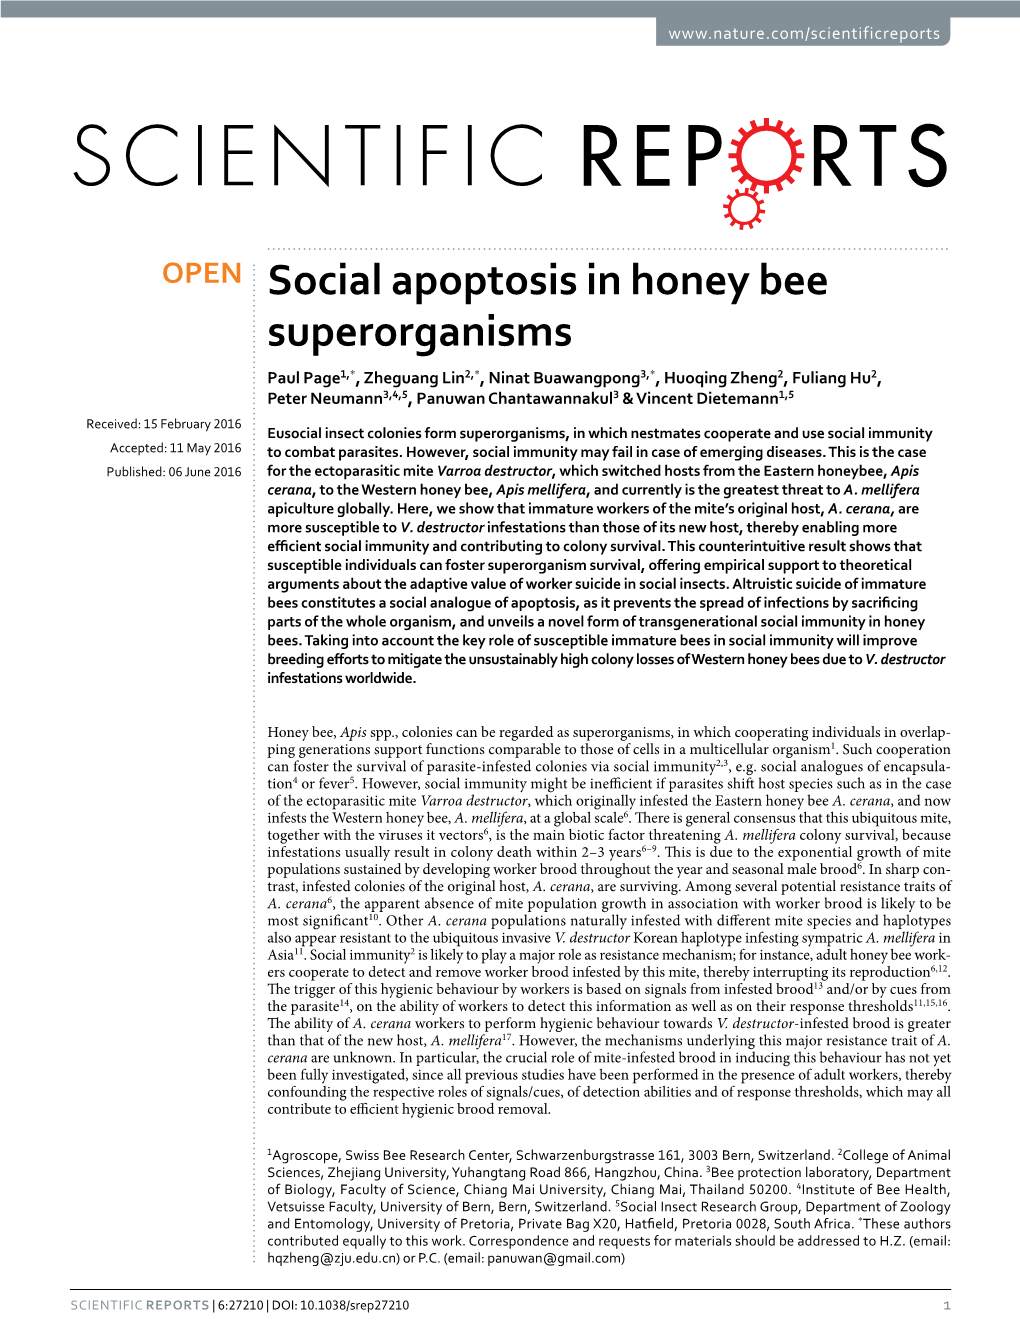 Social Apoptosis in Honey Bee Superorganisms